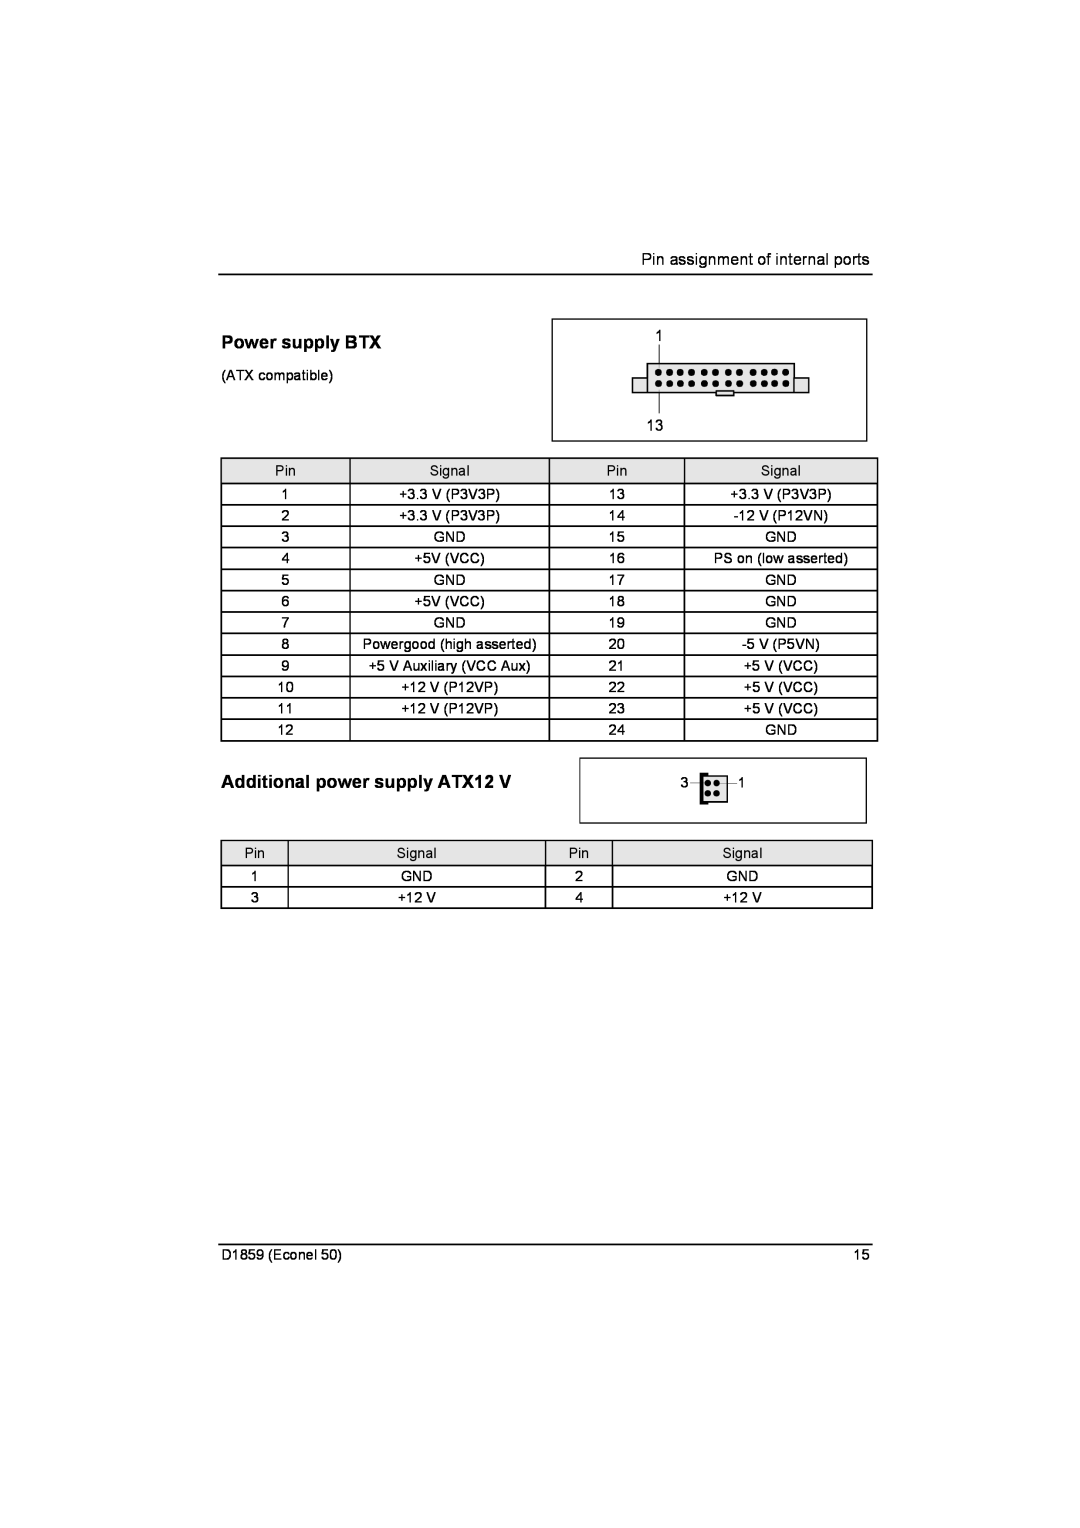 Fujitsu D1859 technical manual Power supply BTX, Additional power supply ATX12, Pin assignment of internal ports 